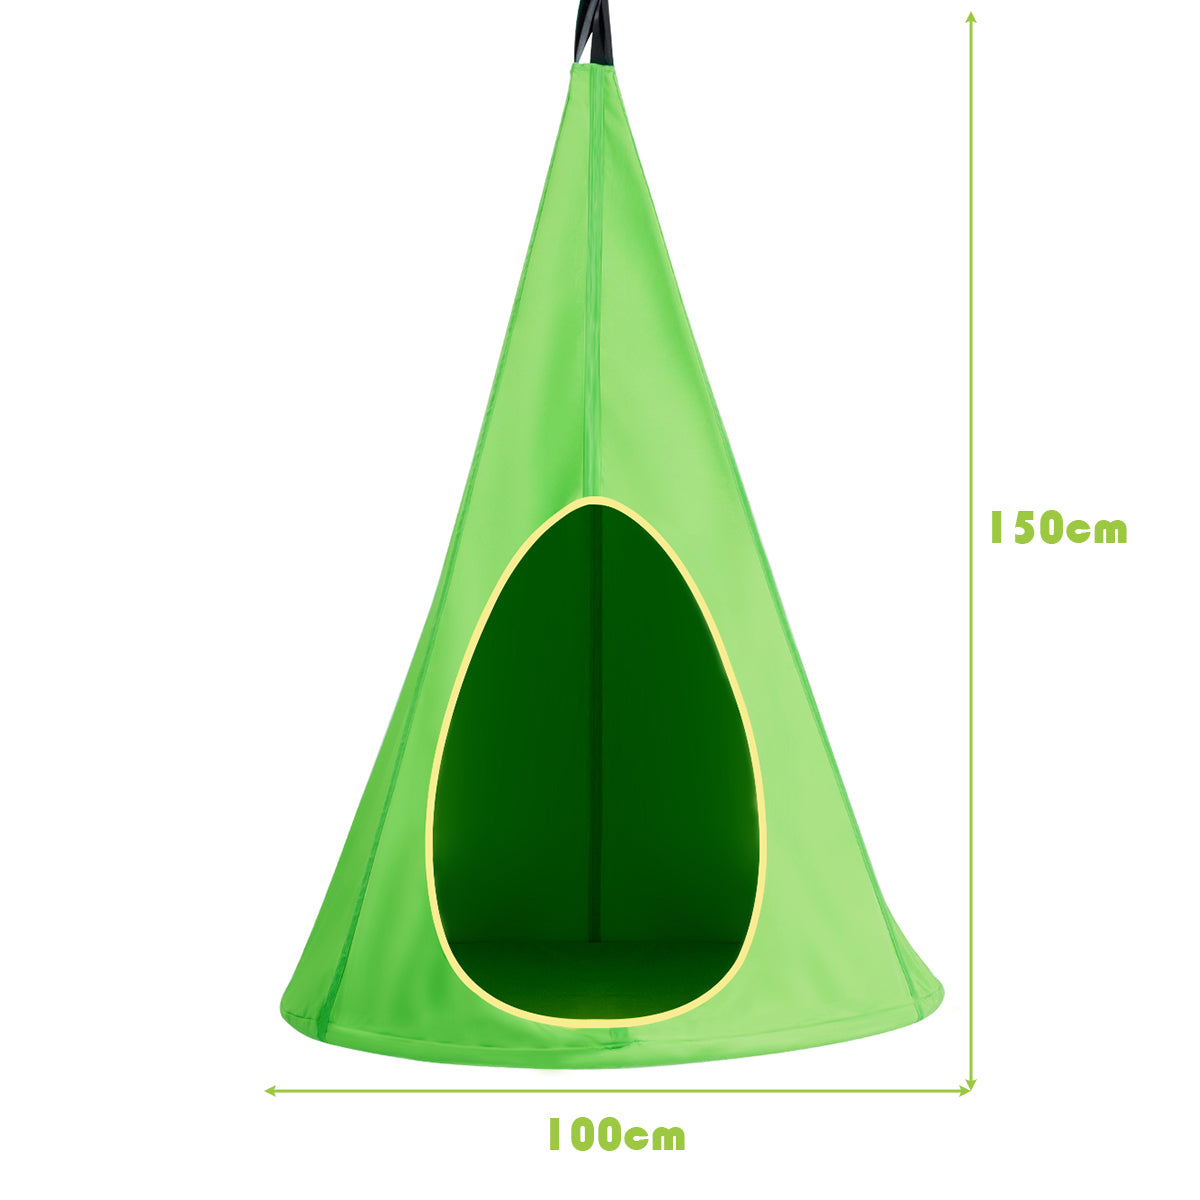 100 cm Adjustable Kids Tree Swing Tent with 2 Peep Windows-Green